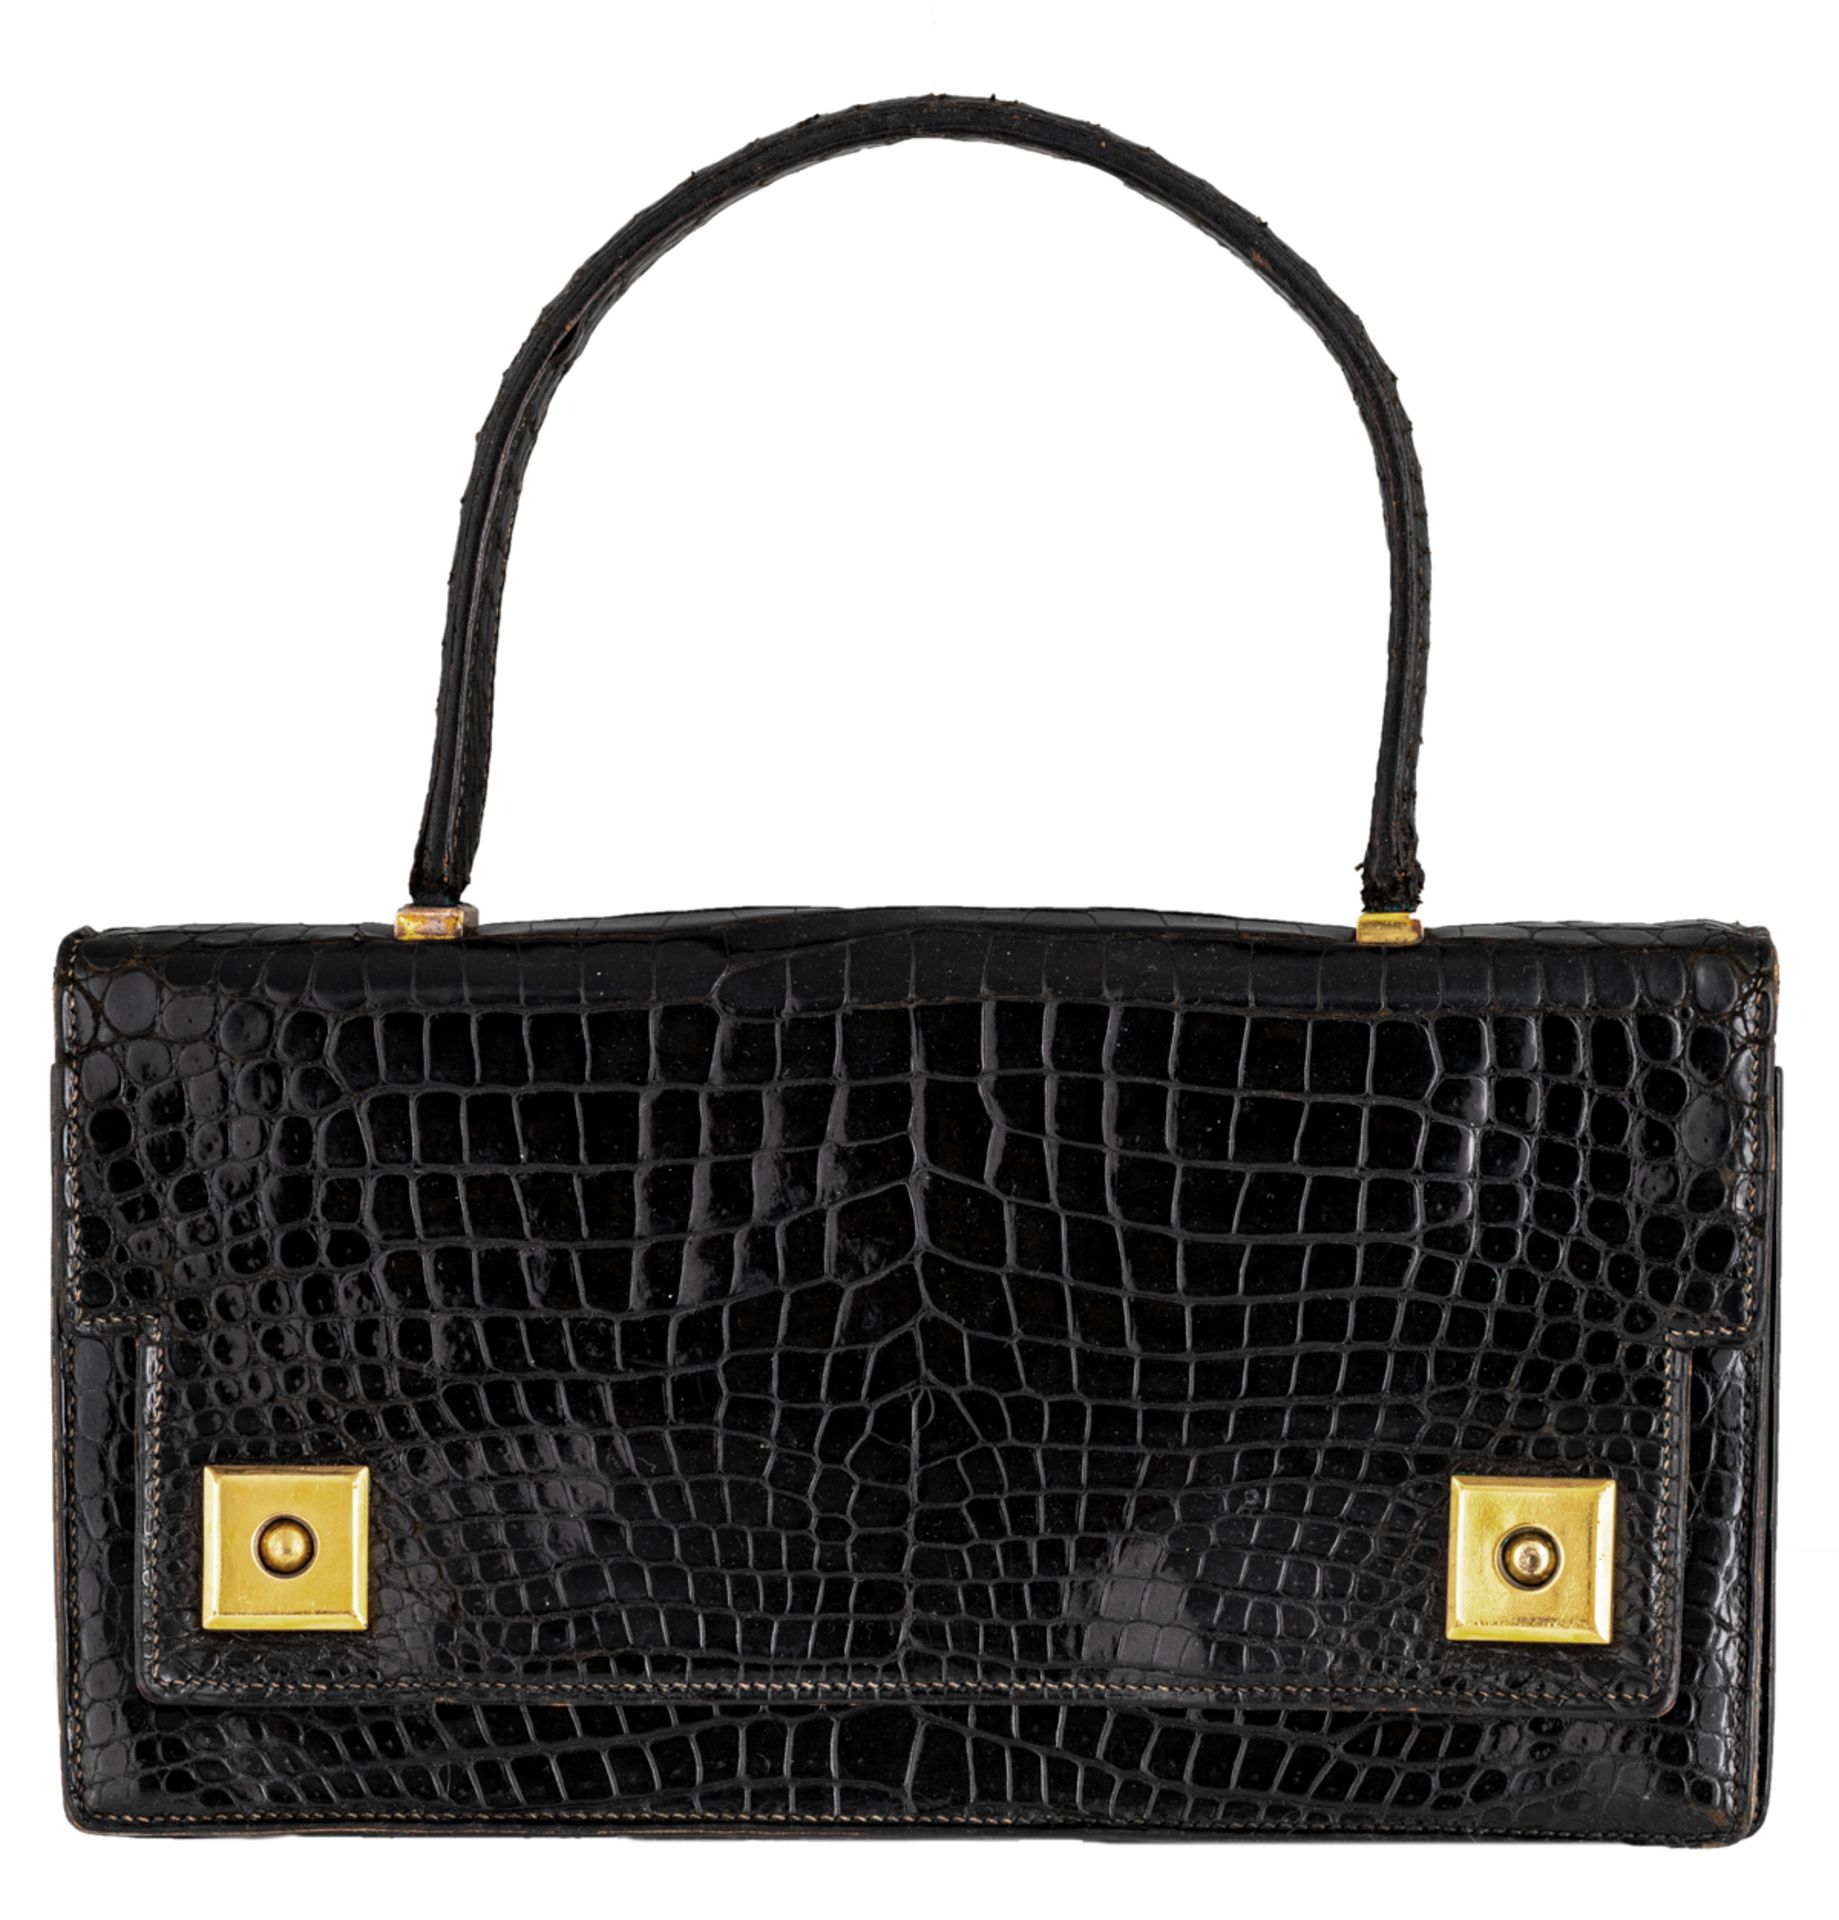 A Hermès 'Piano' handbag in black croco leather, H 14,5 x 27 cm